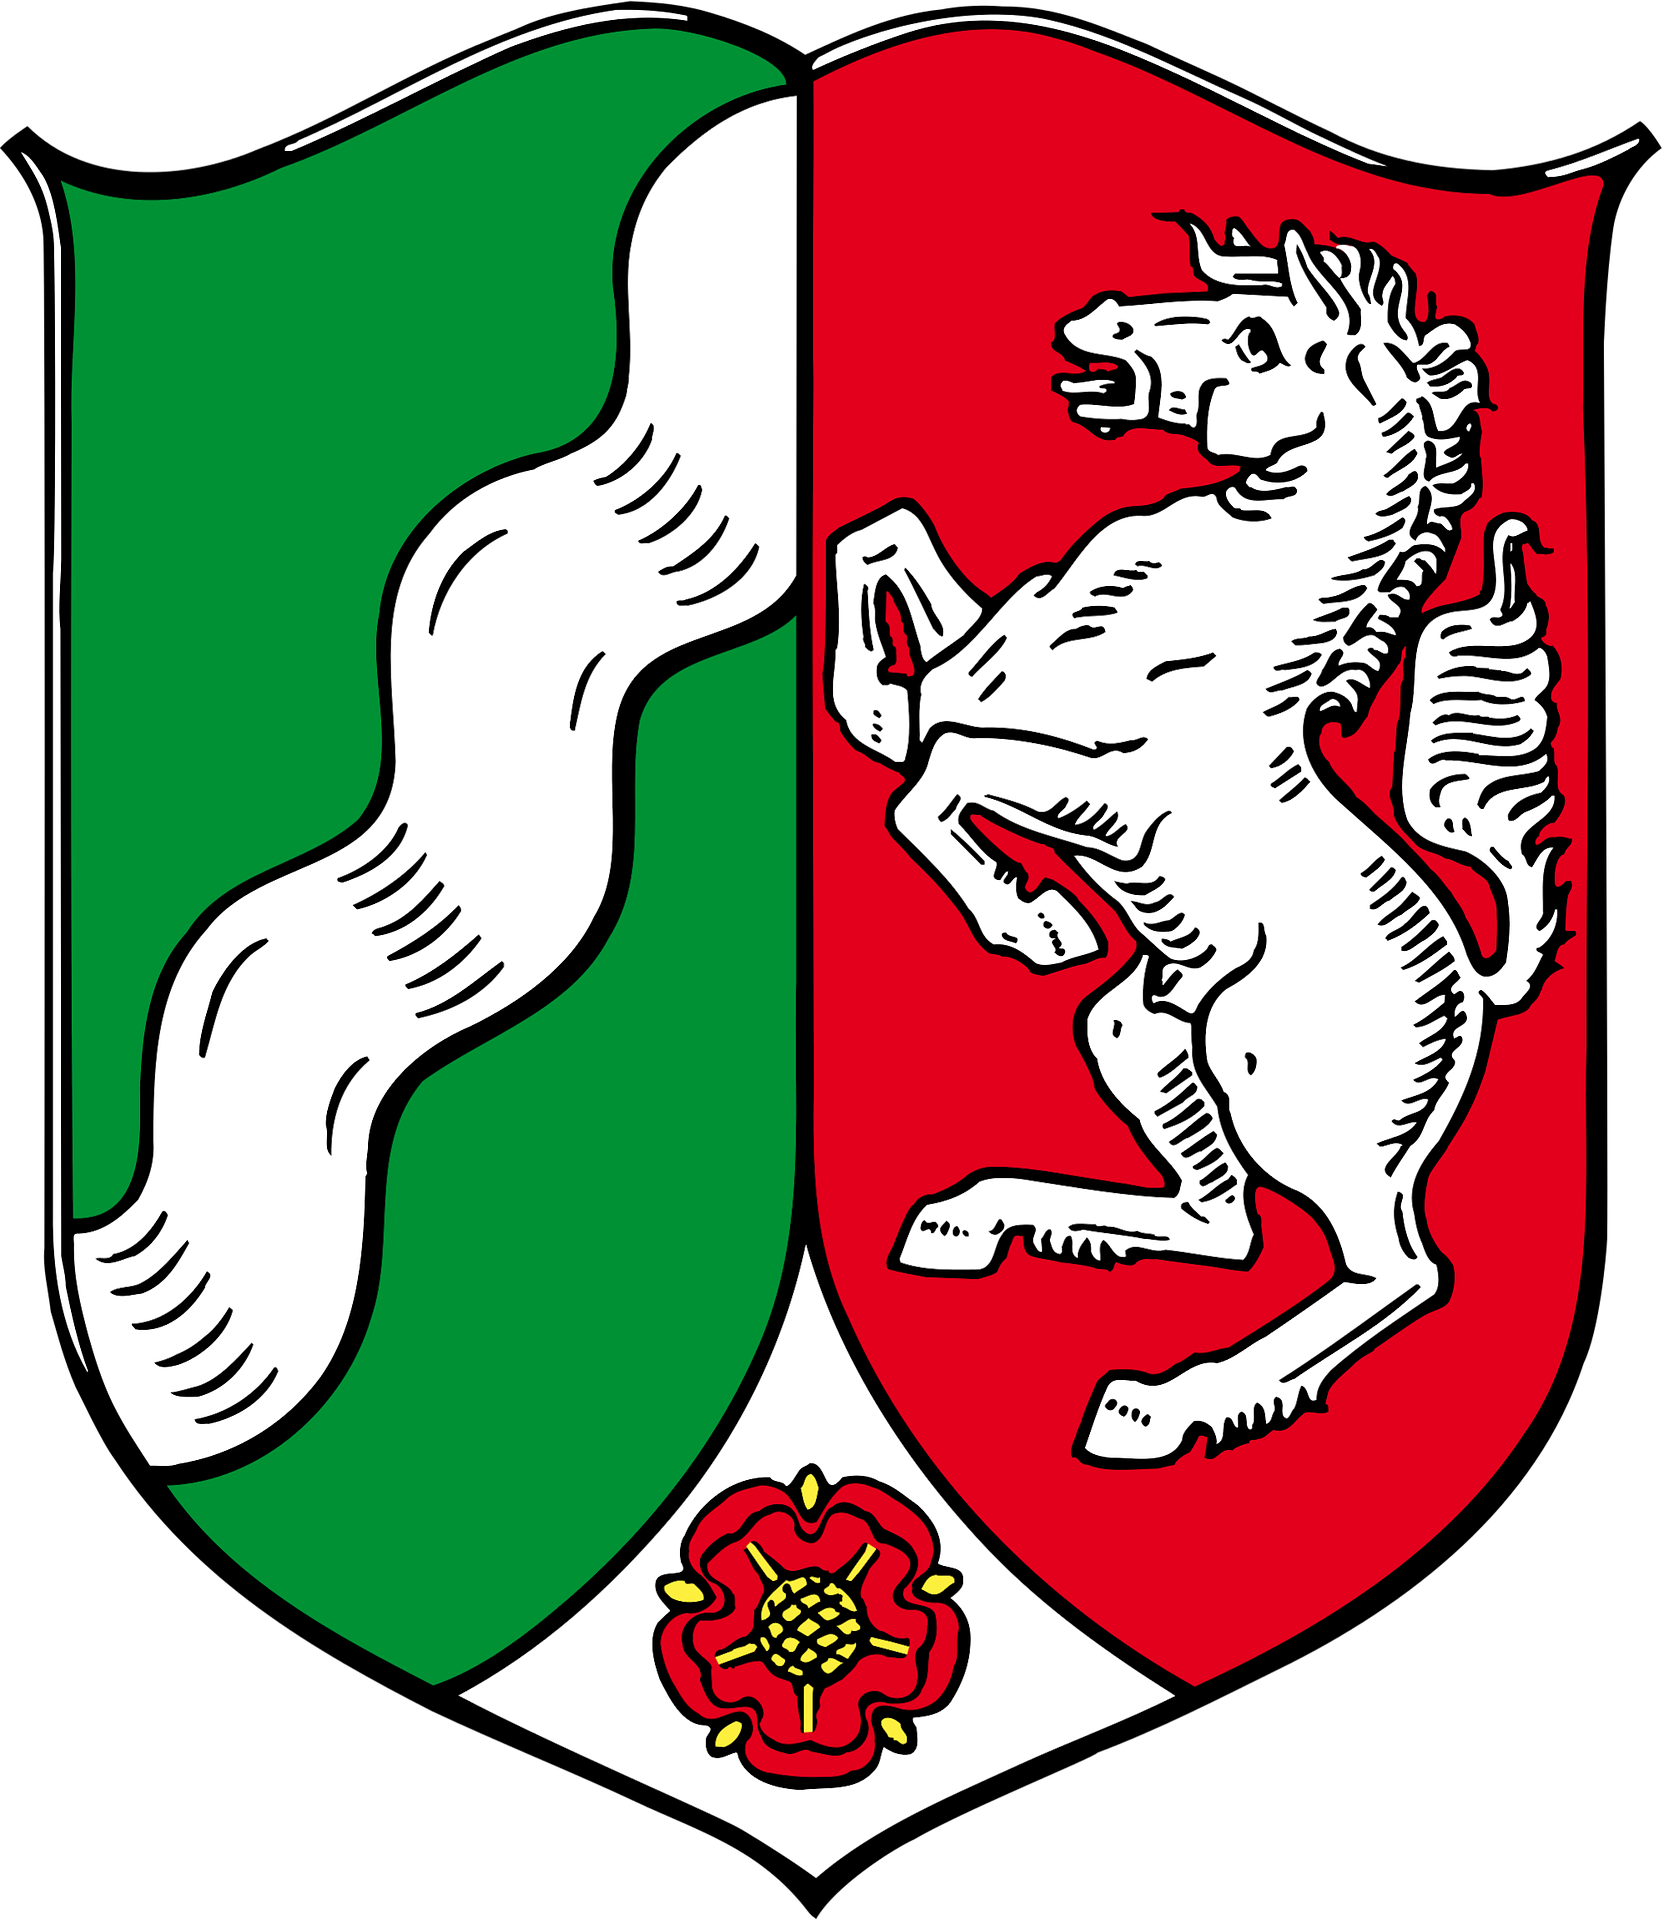 coat-of-arms-527348_1920 (c) pixabay